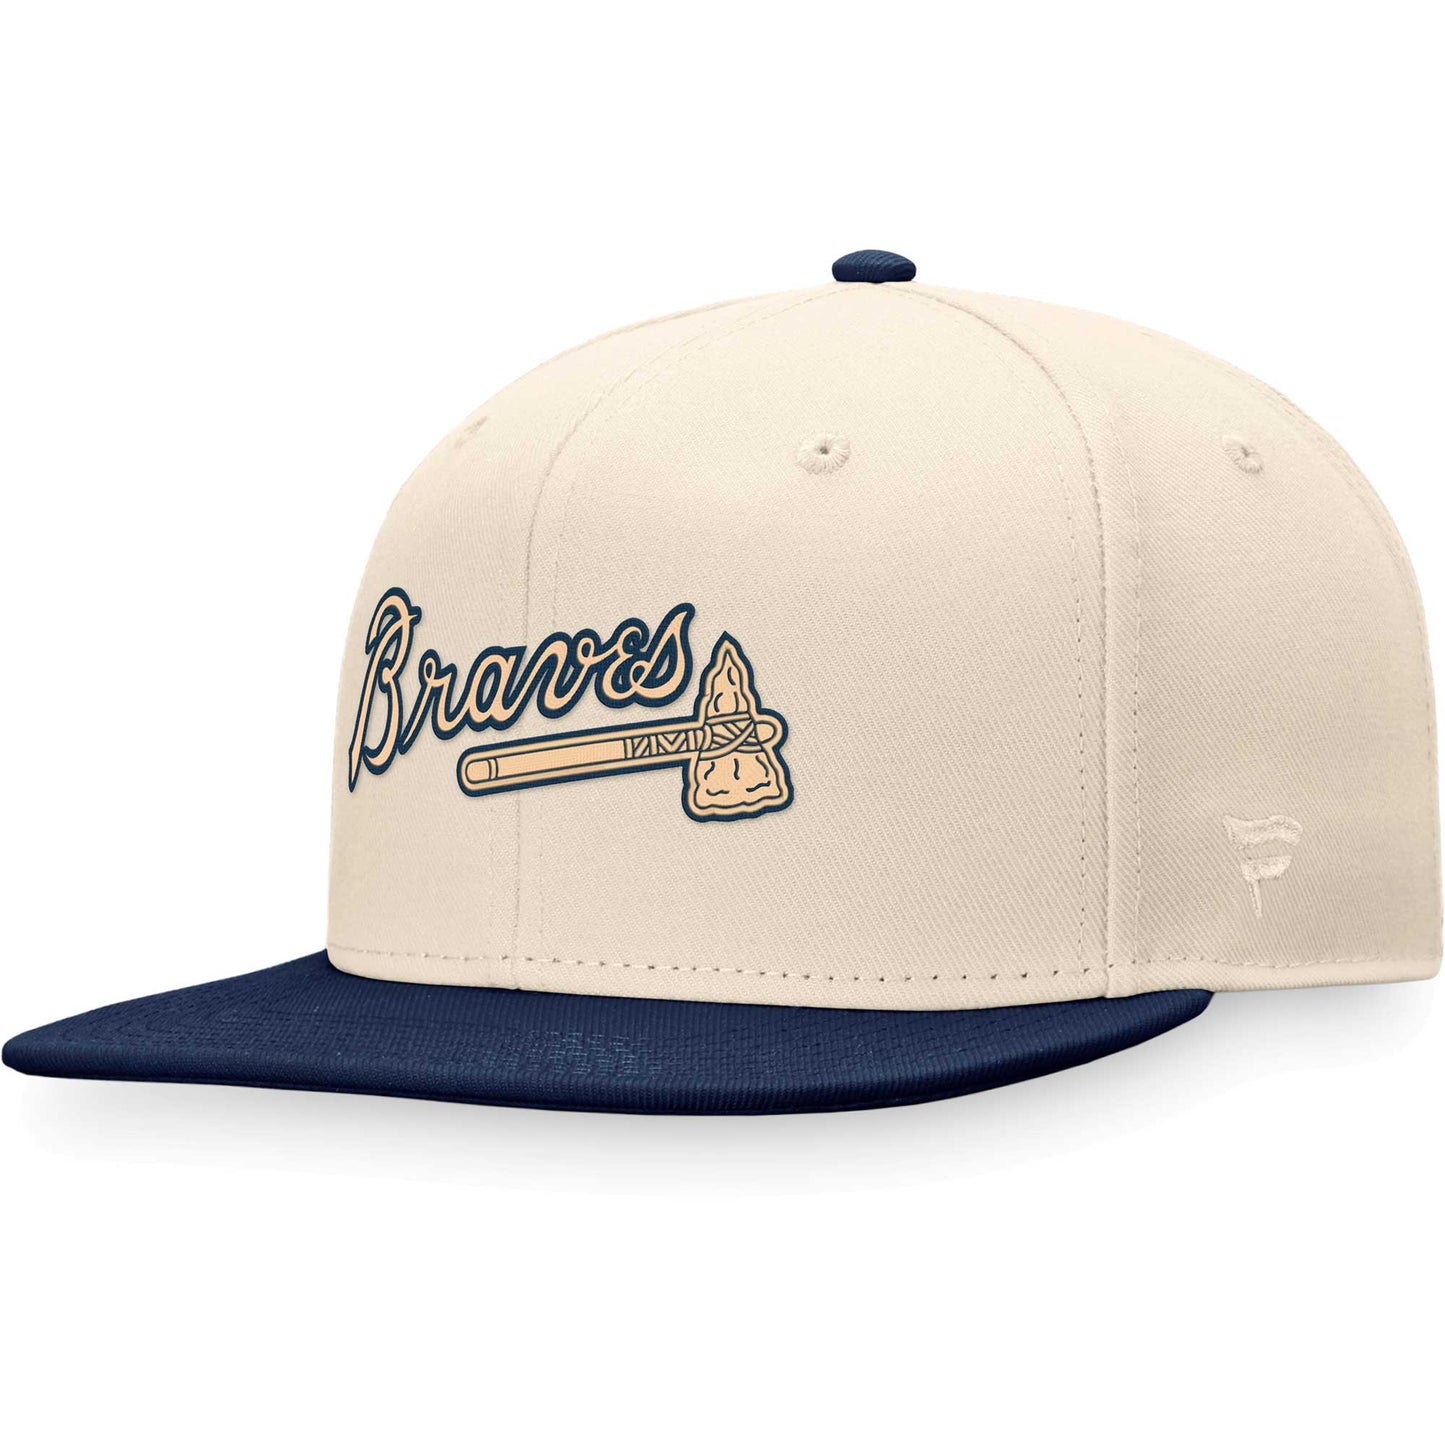 Atlanta Braves Fanatics Branded Fitted Hat - Natural/Navy